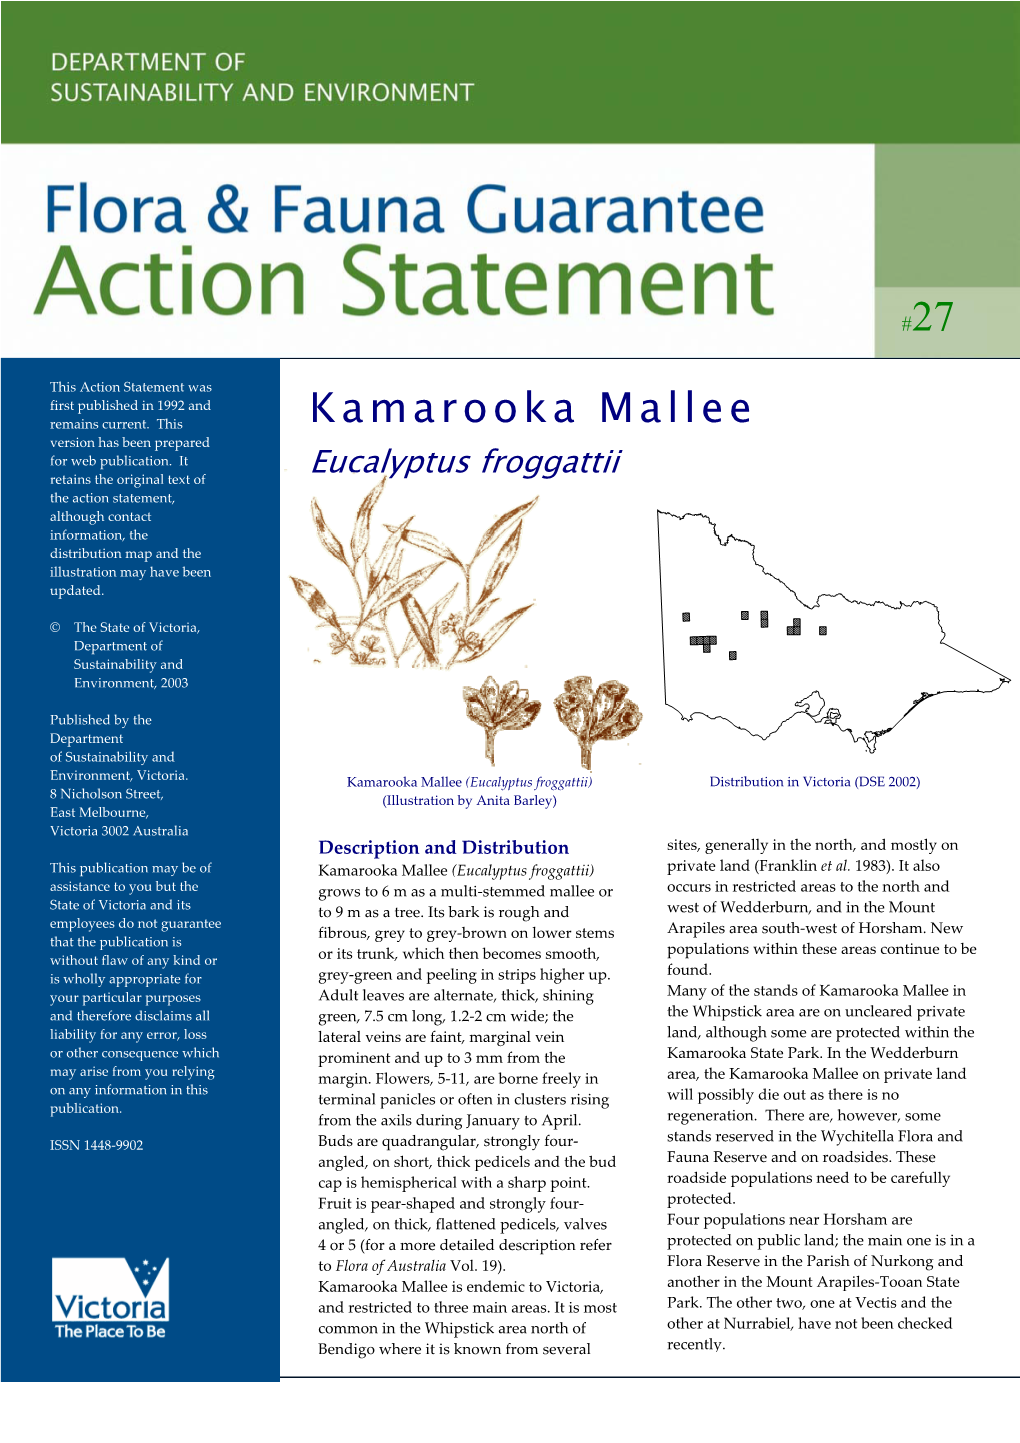 Kamarooka Mallee Version Has Been Prepared for Web Publication